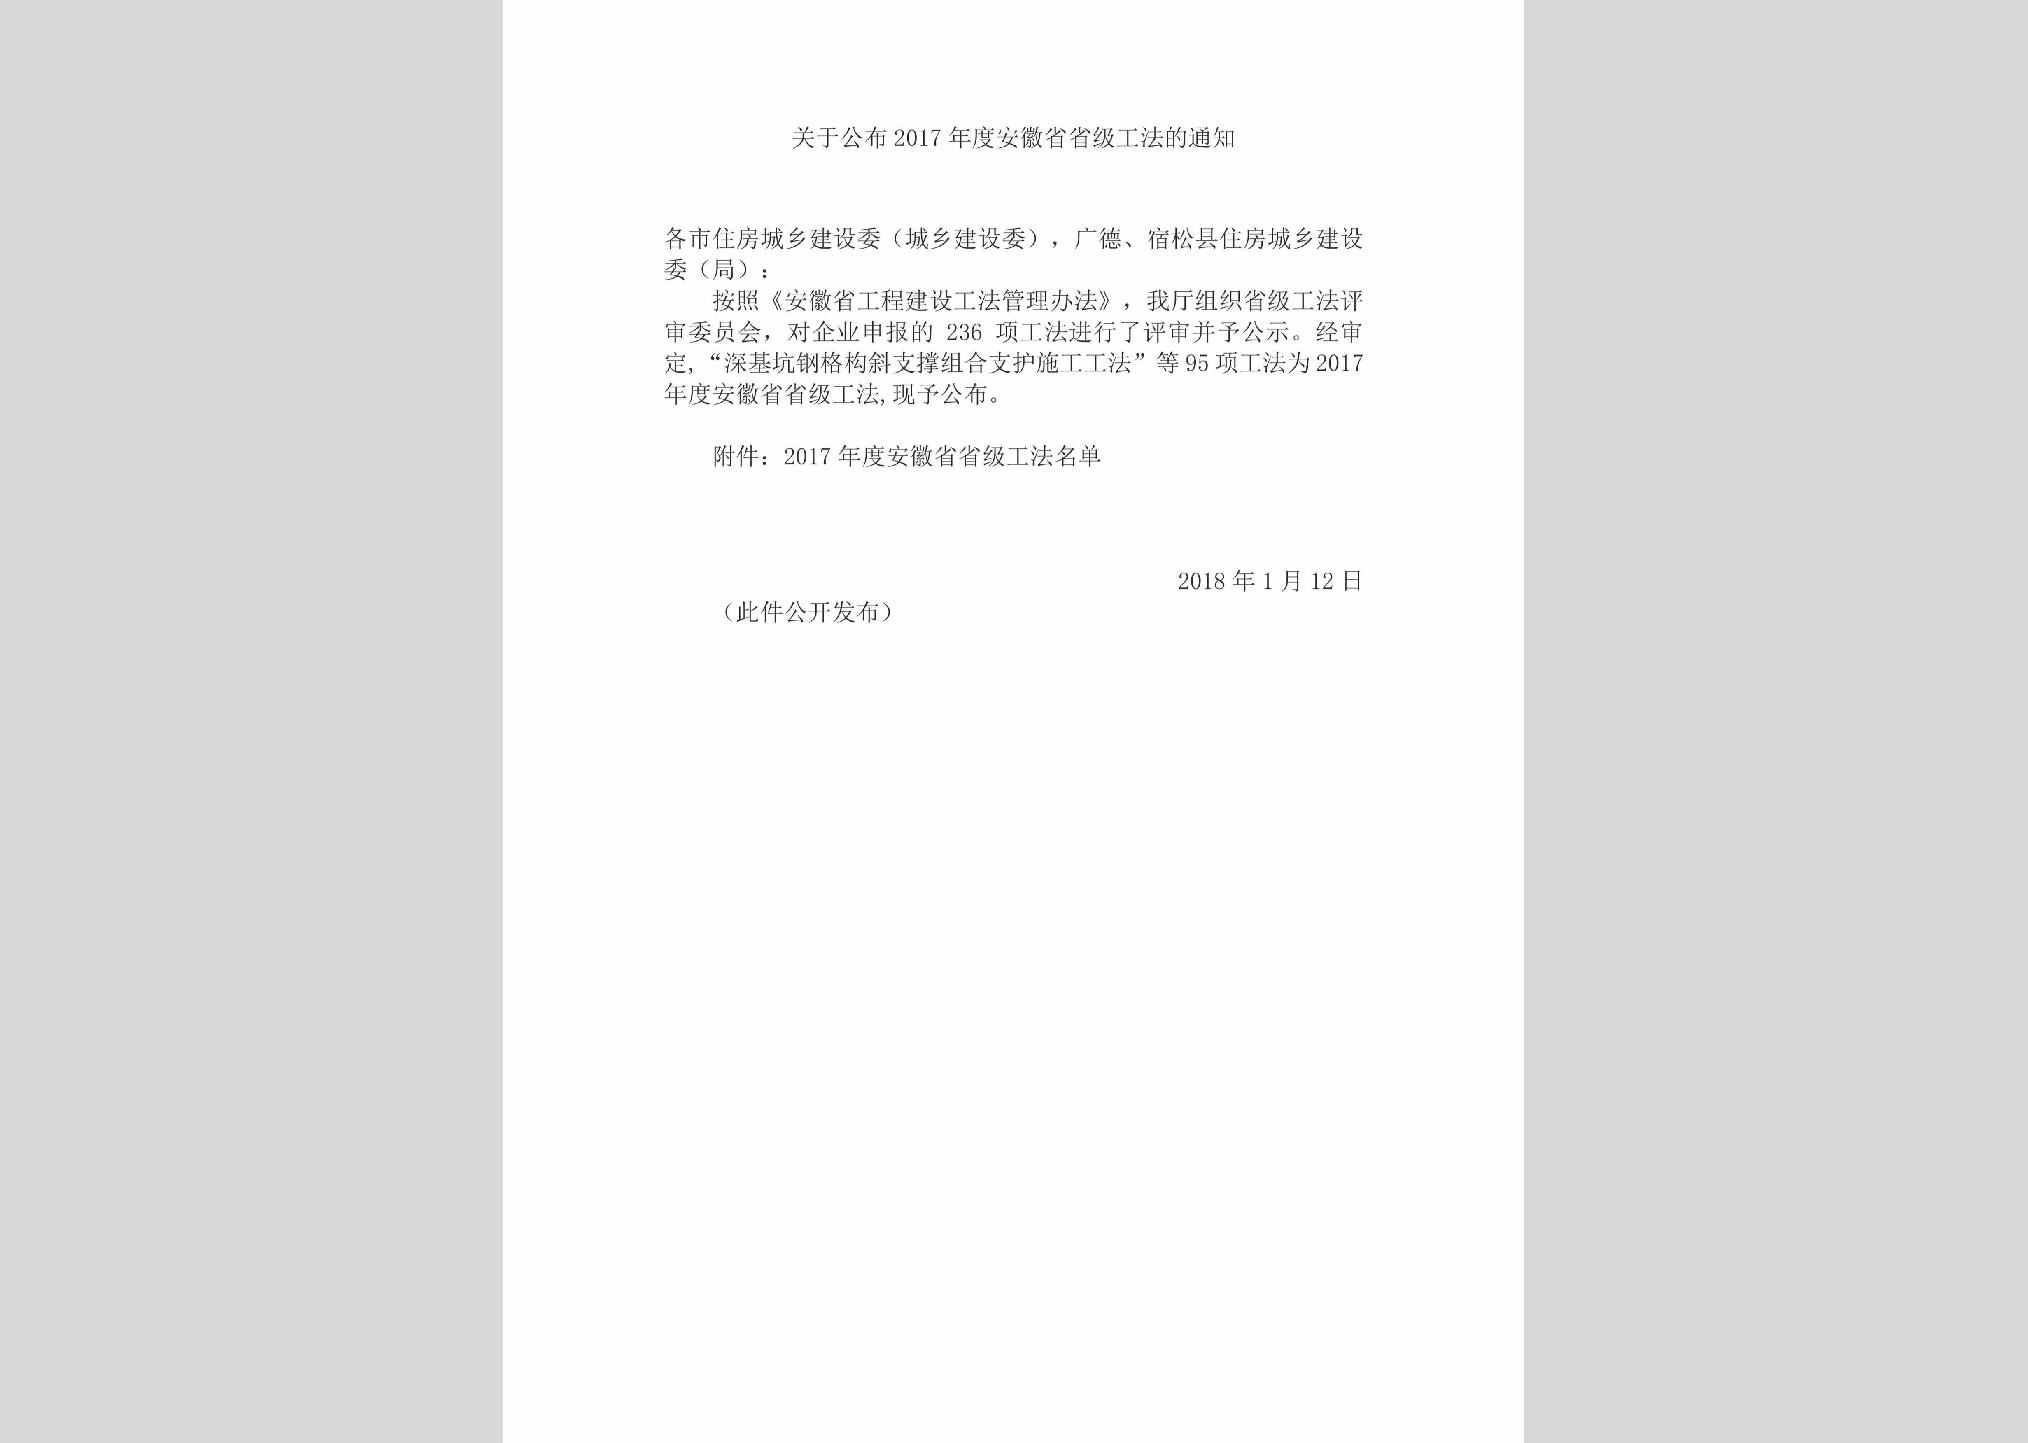 AH-GBSJGFTZ-2018：关于公布2017年度安徽省省级工法的通知